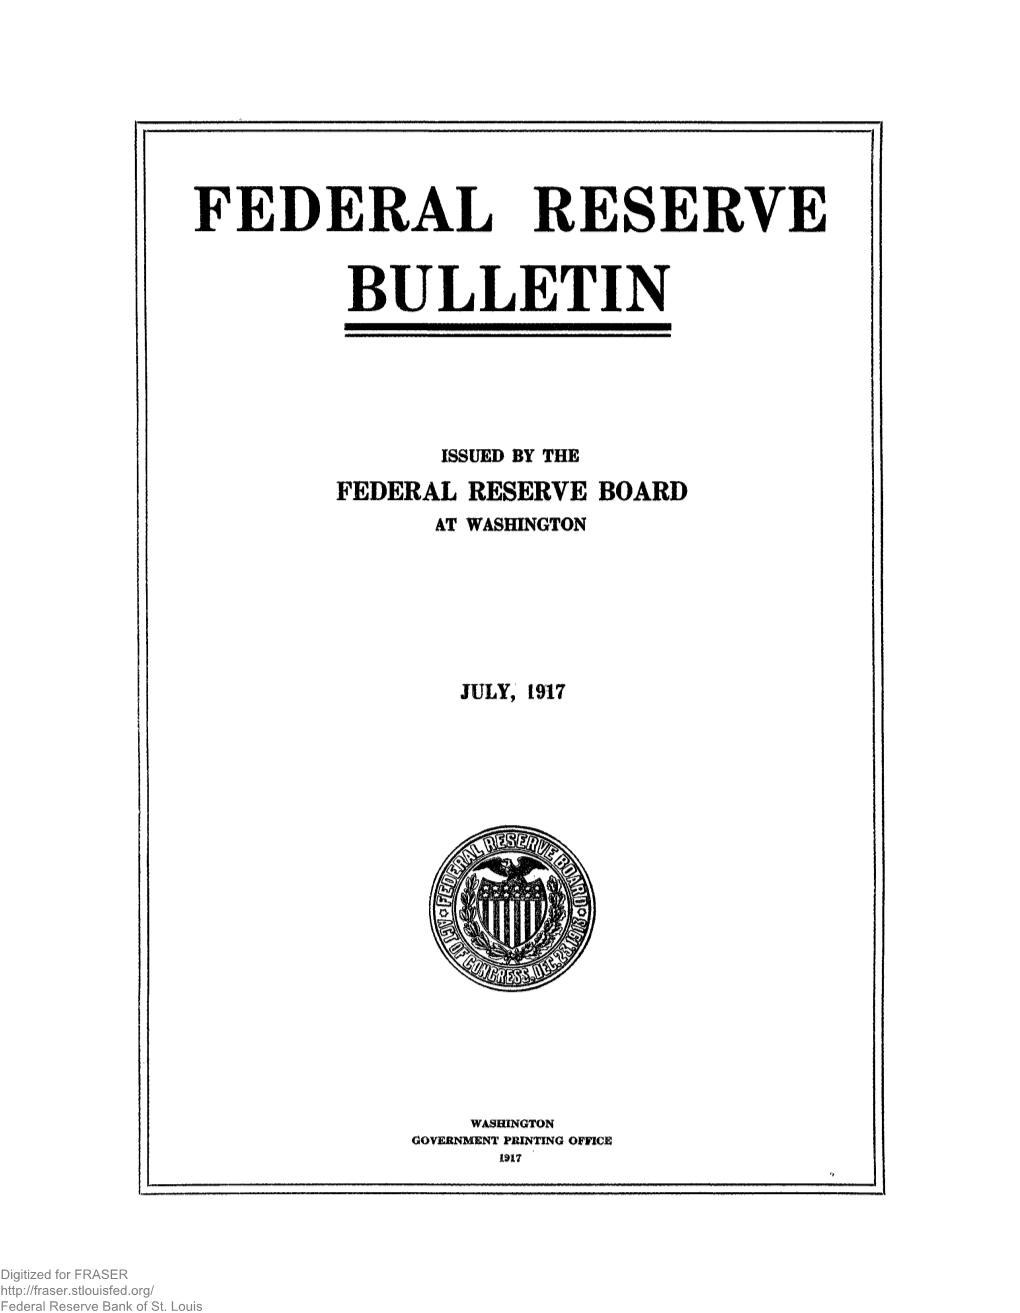 Federal Reserve Bulletin July 1917